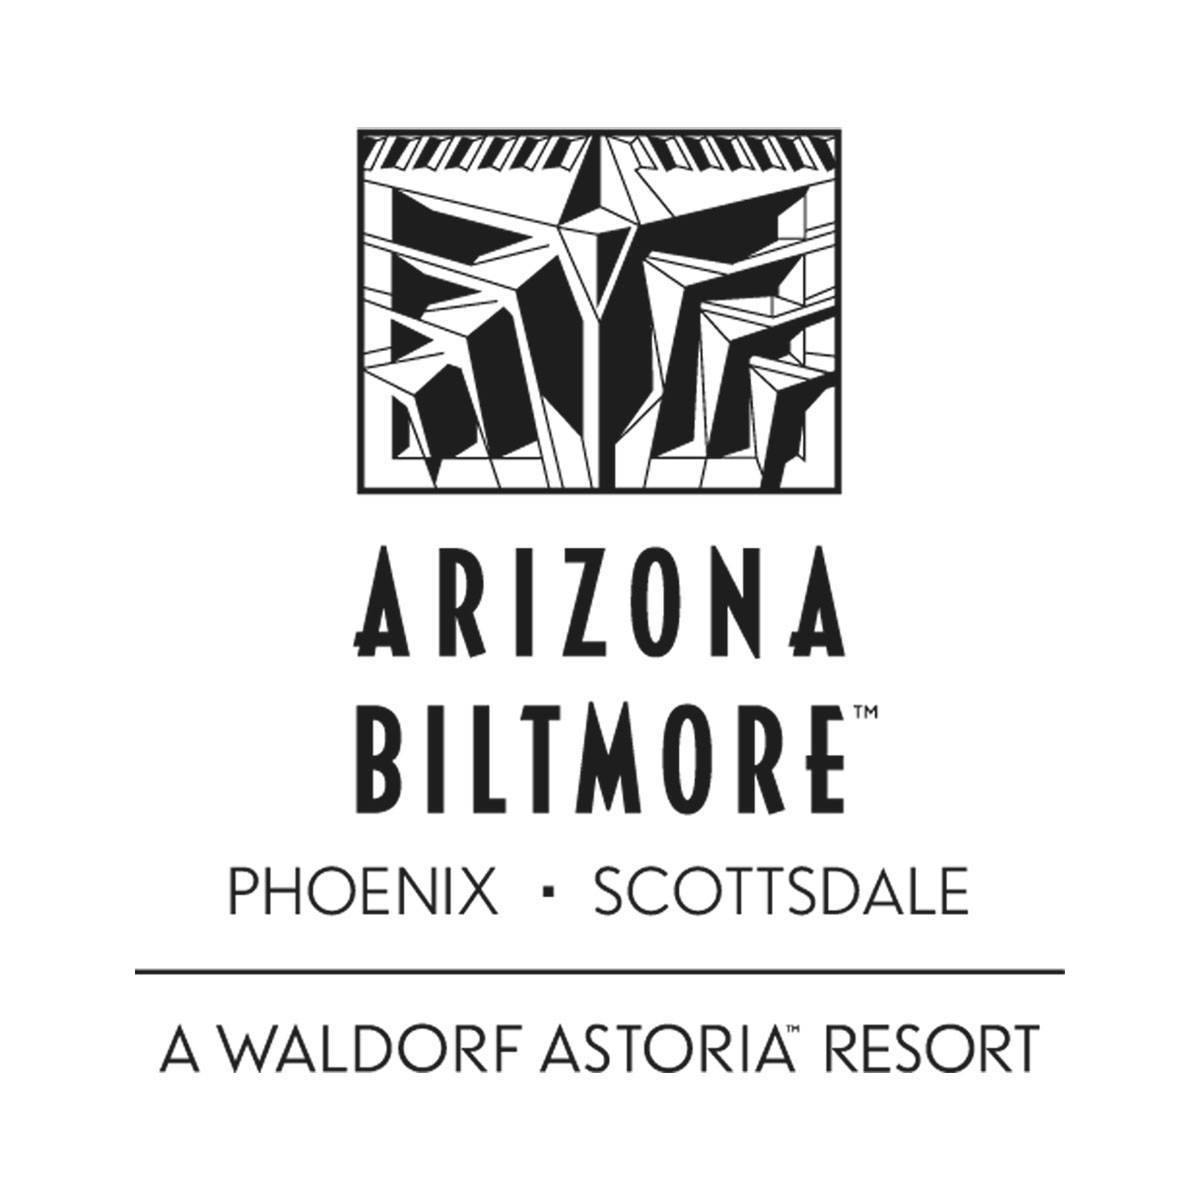 Arizona Biltmore